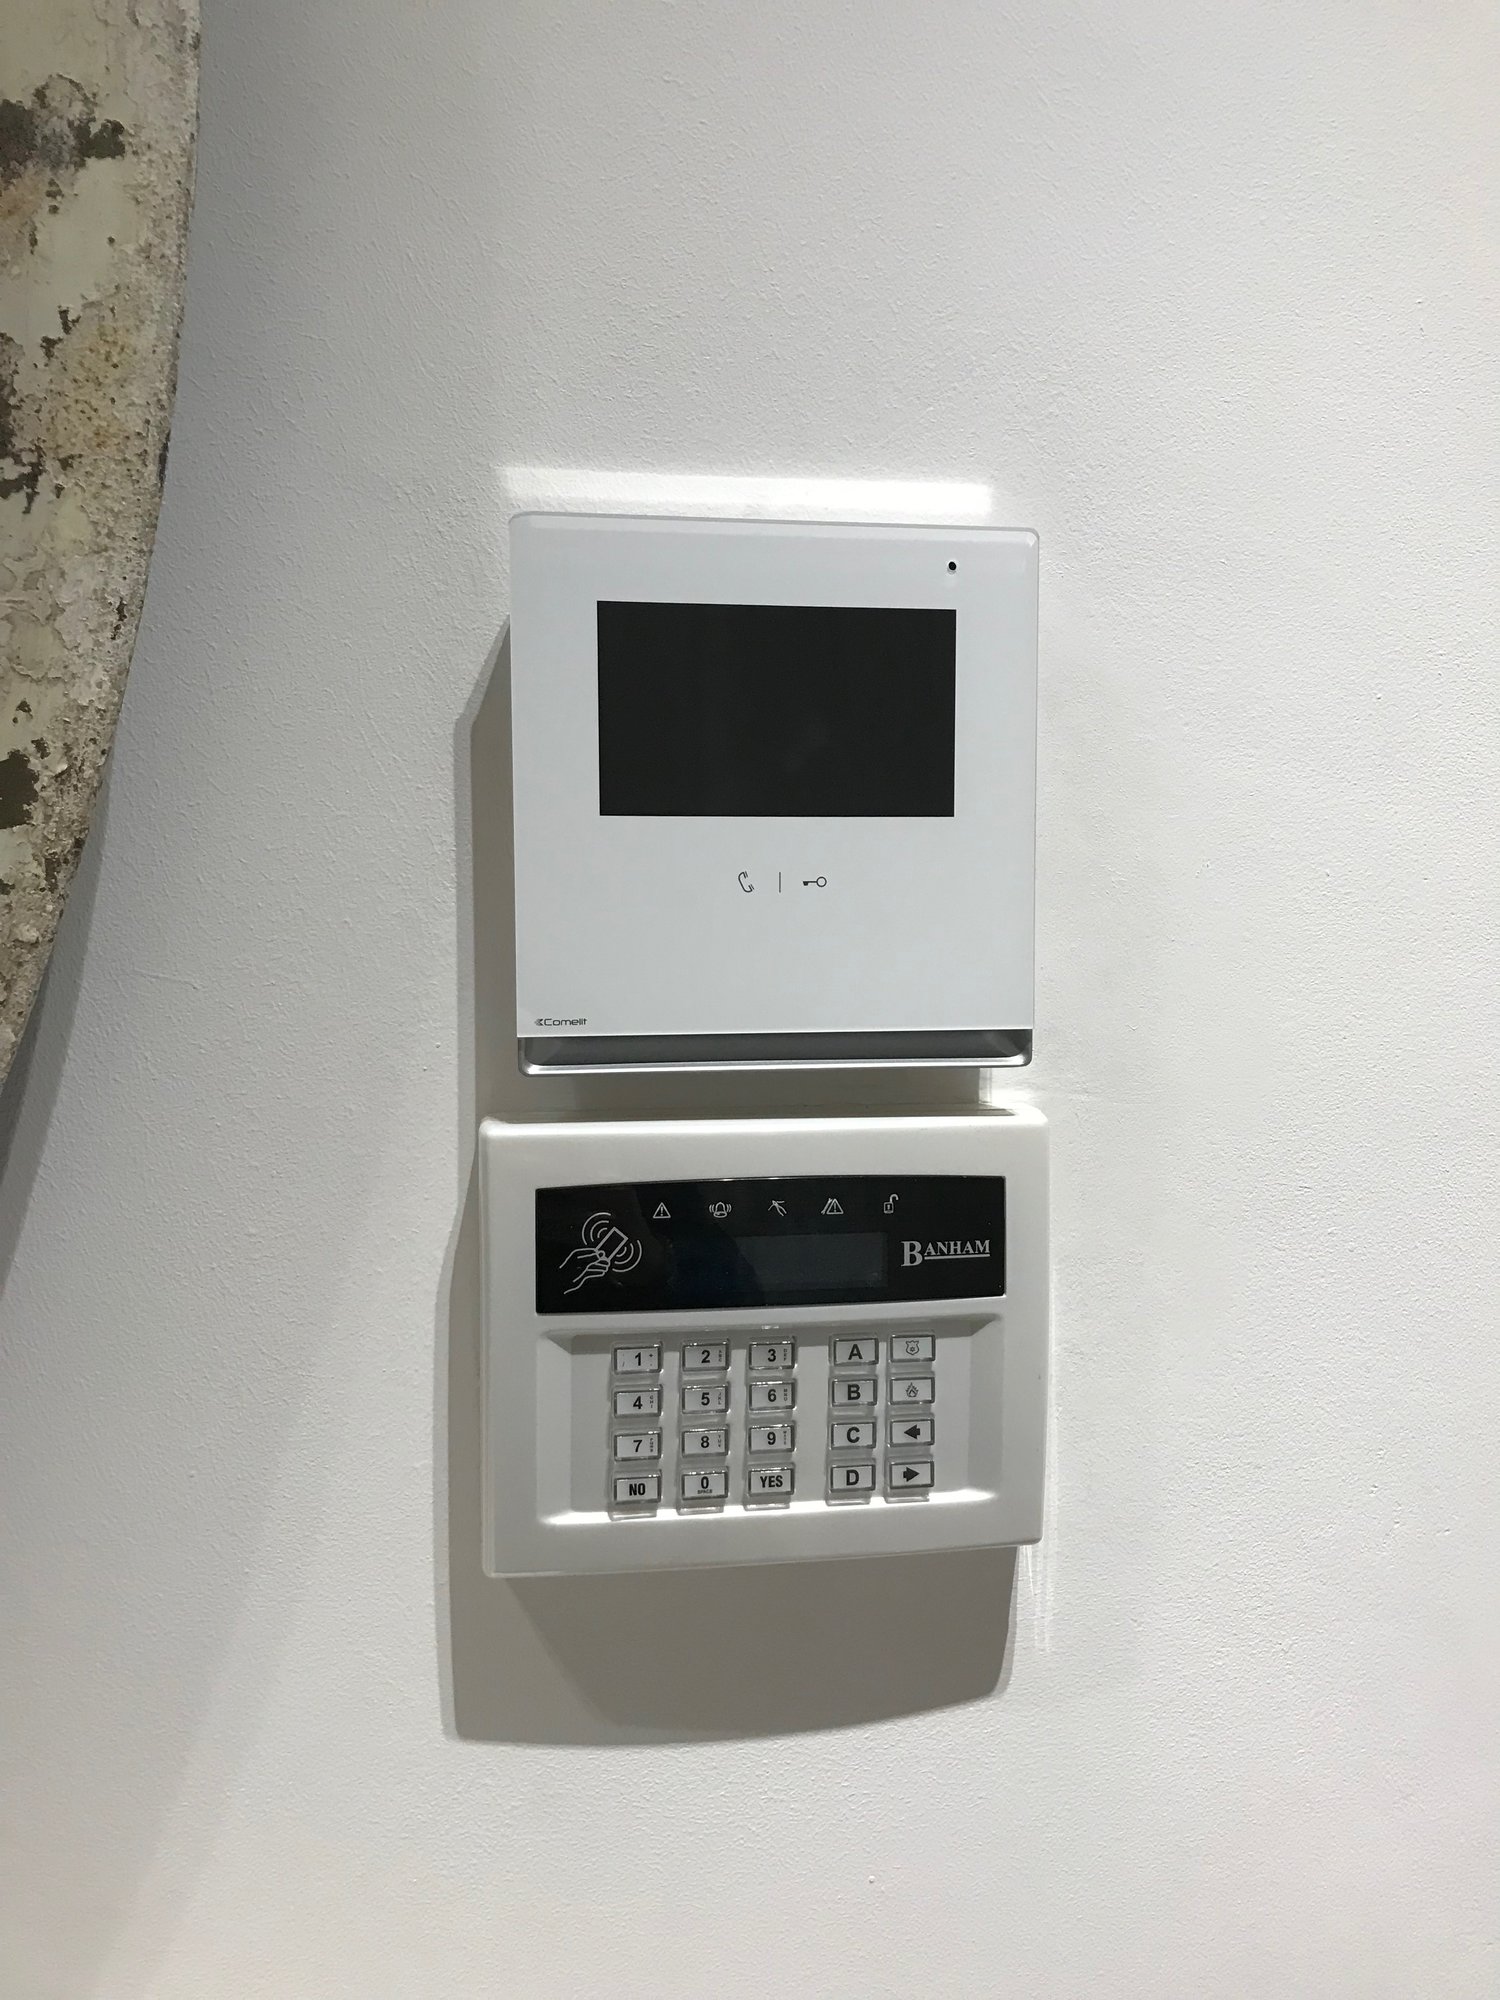 Texecomm alarm panel and a comelit alarm panel